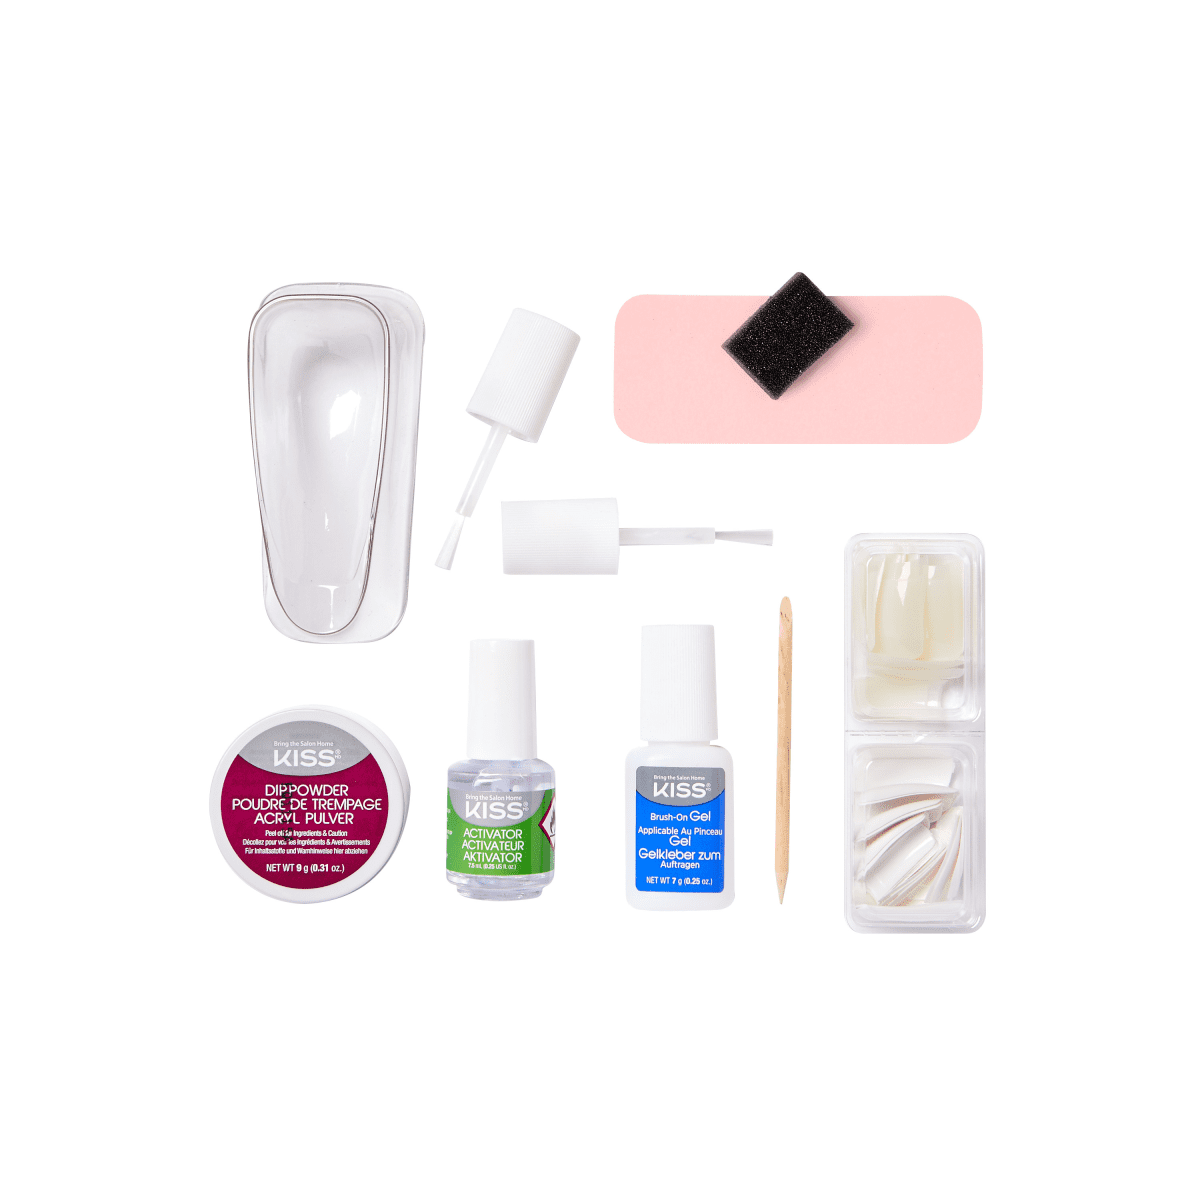 KISS Salon Acrylic French Nail Manicure Set, Petite Length, Square, Crush  Hour, Nail Kit Includes Pink Gel Nail Glue (Net Wt. 2 g / 0.07oz.), Mini  File, Manicure Stick, and 28 Fake Nails